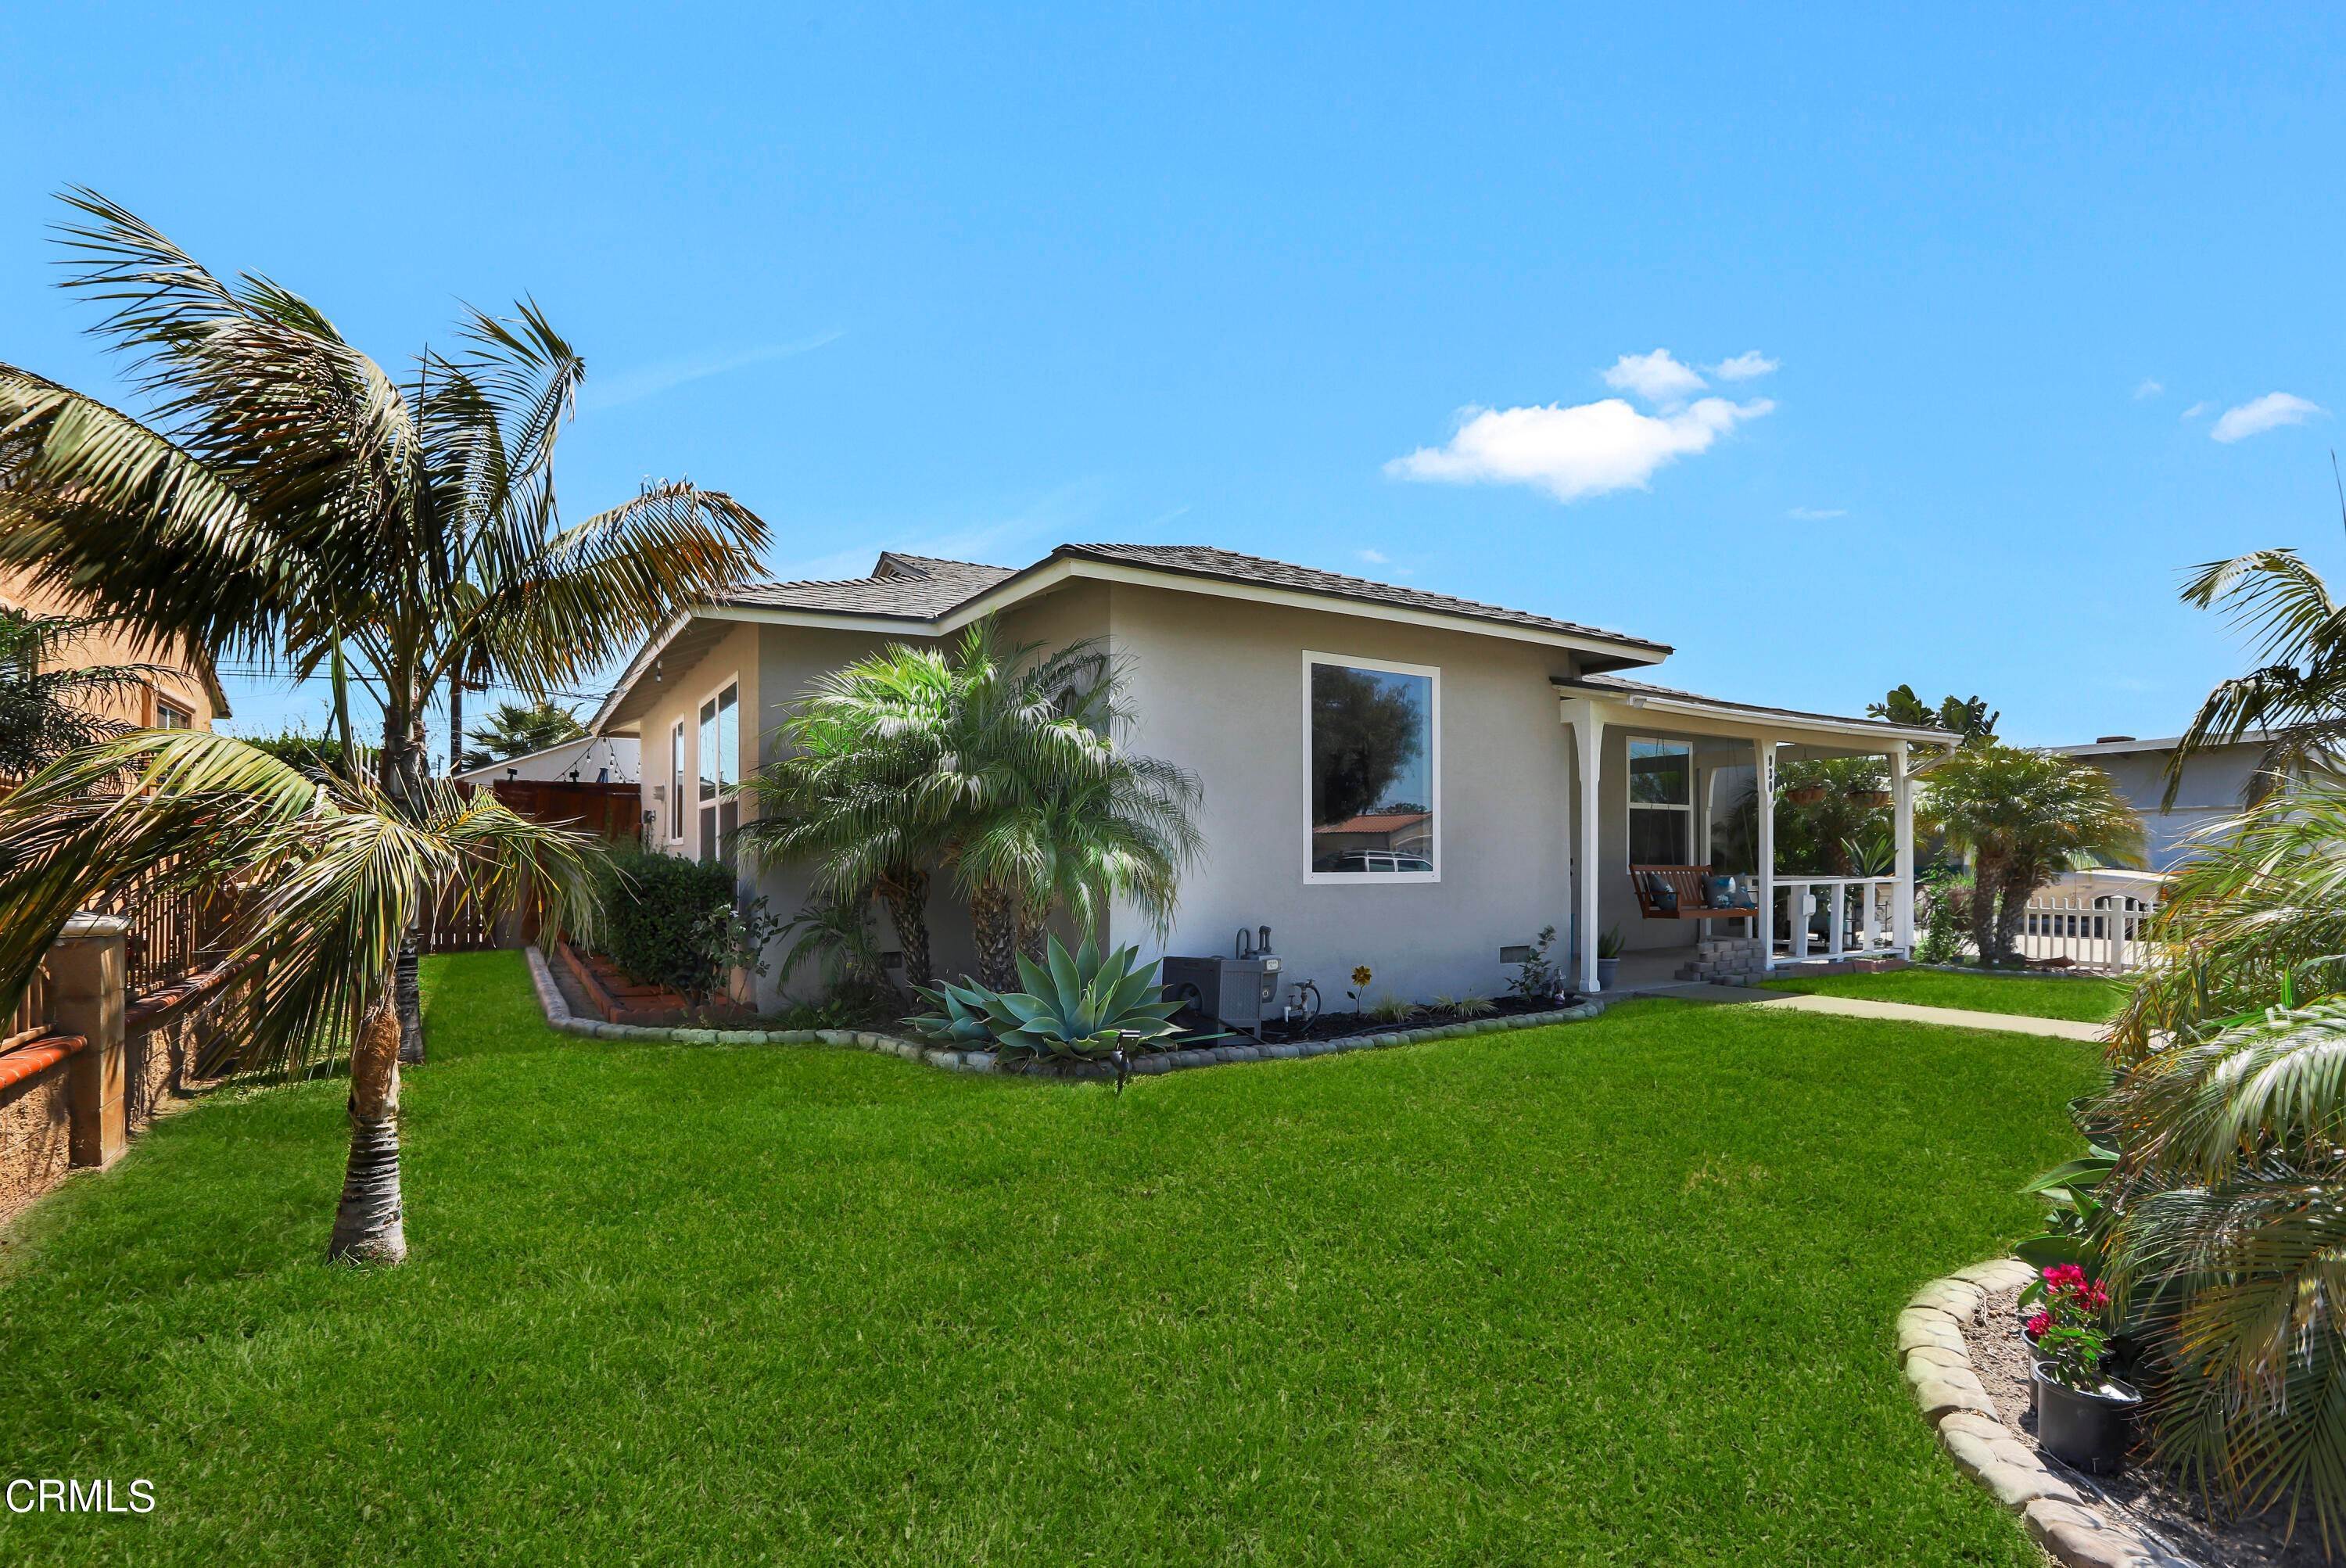 2. Single Family Homes for Sale at 930 Doris Avenue Oxnard, California 93030 United States